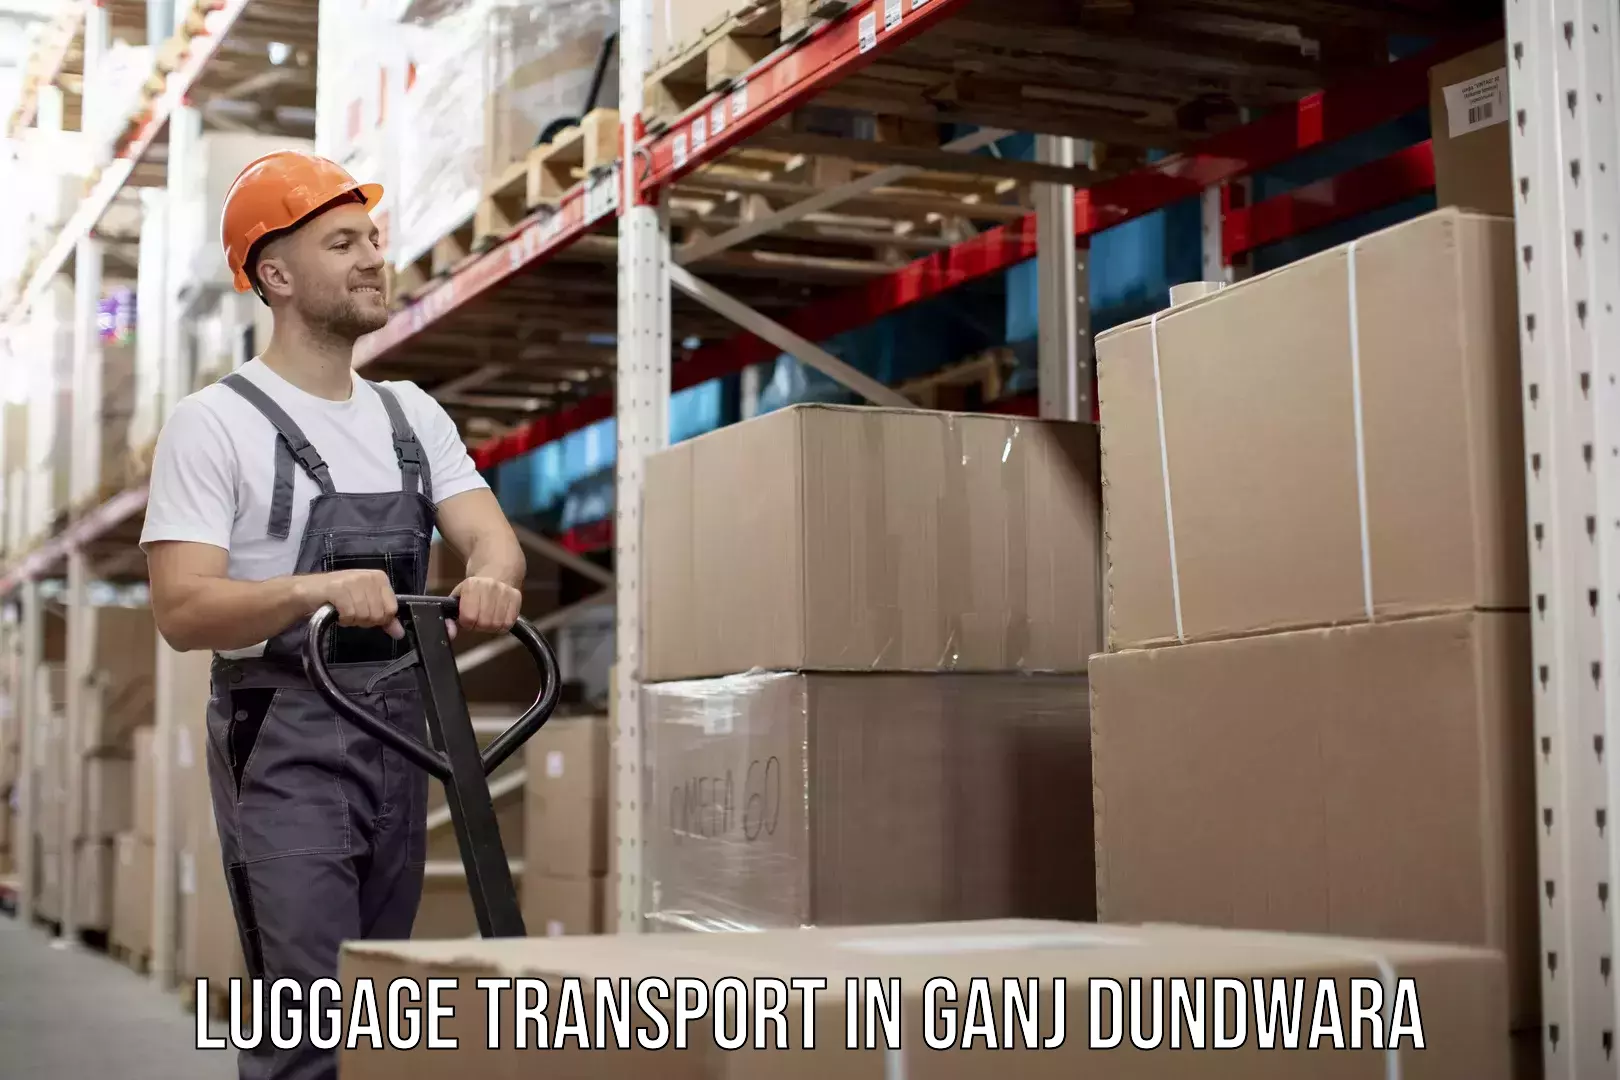 Luggage shipment strategy in Ganj Dundwara